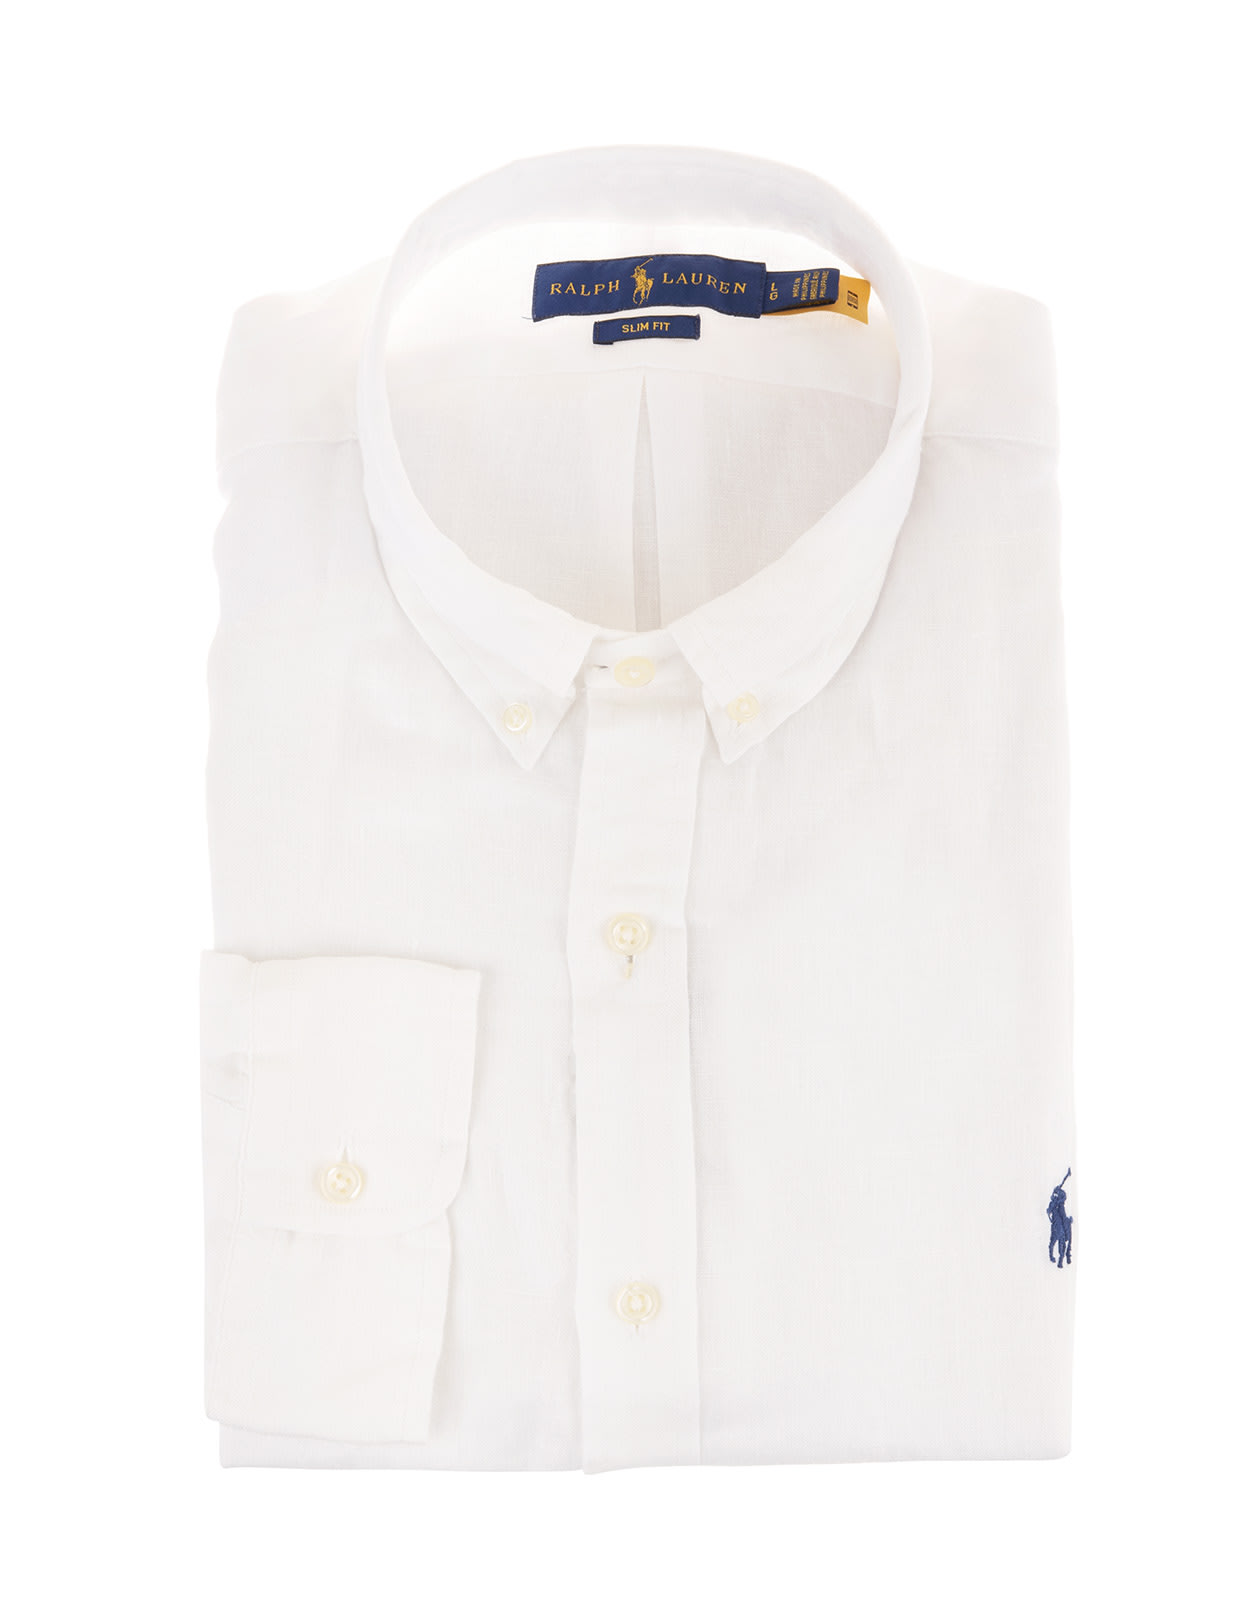 Ralph Lauren Mna White And Navy Blue Slim Fit Linen Shirt